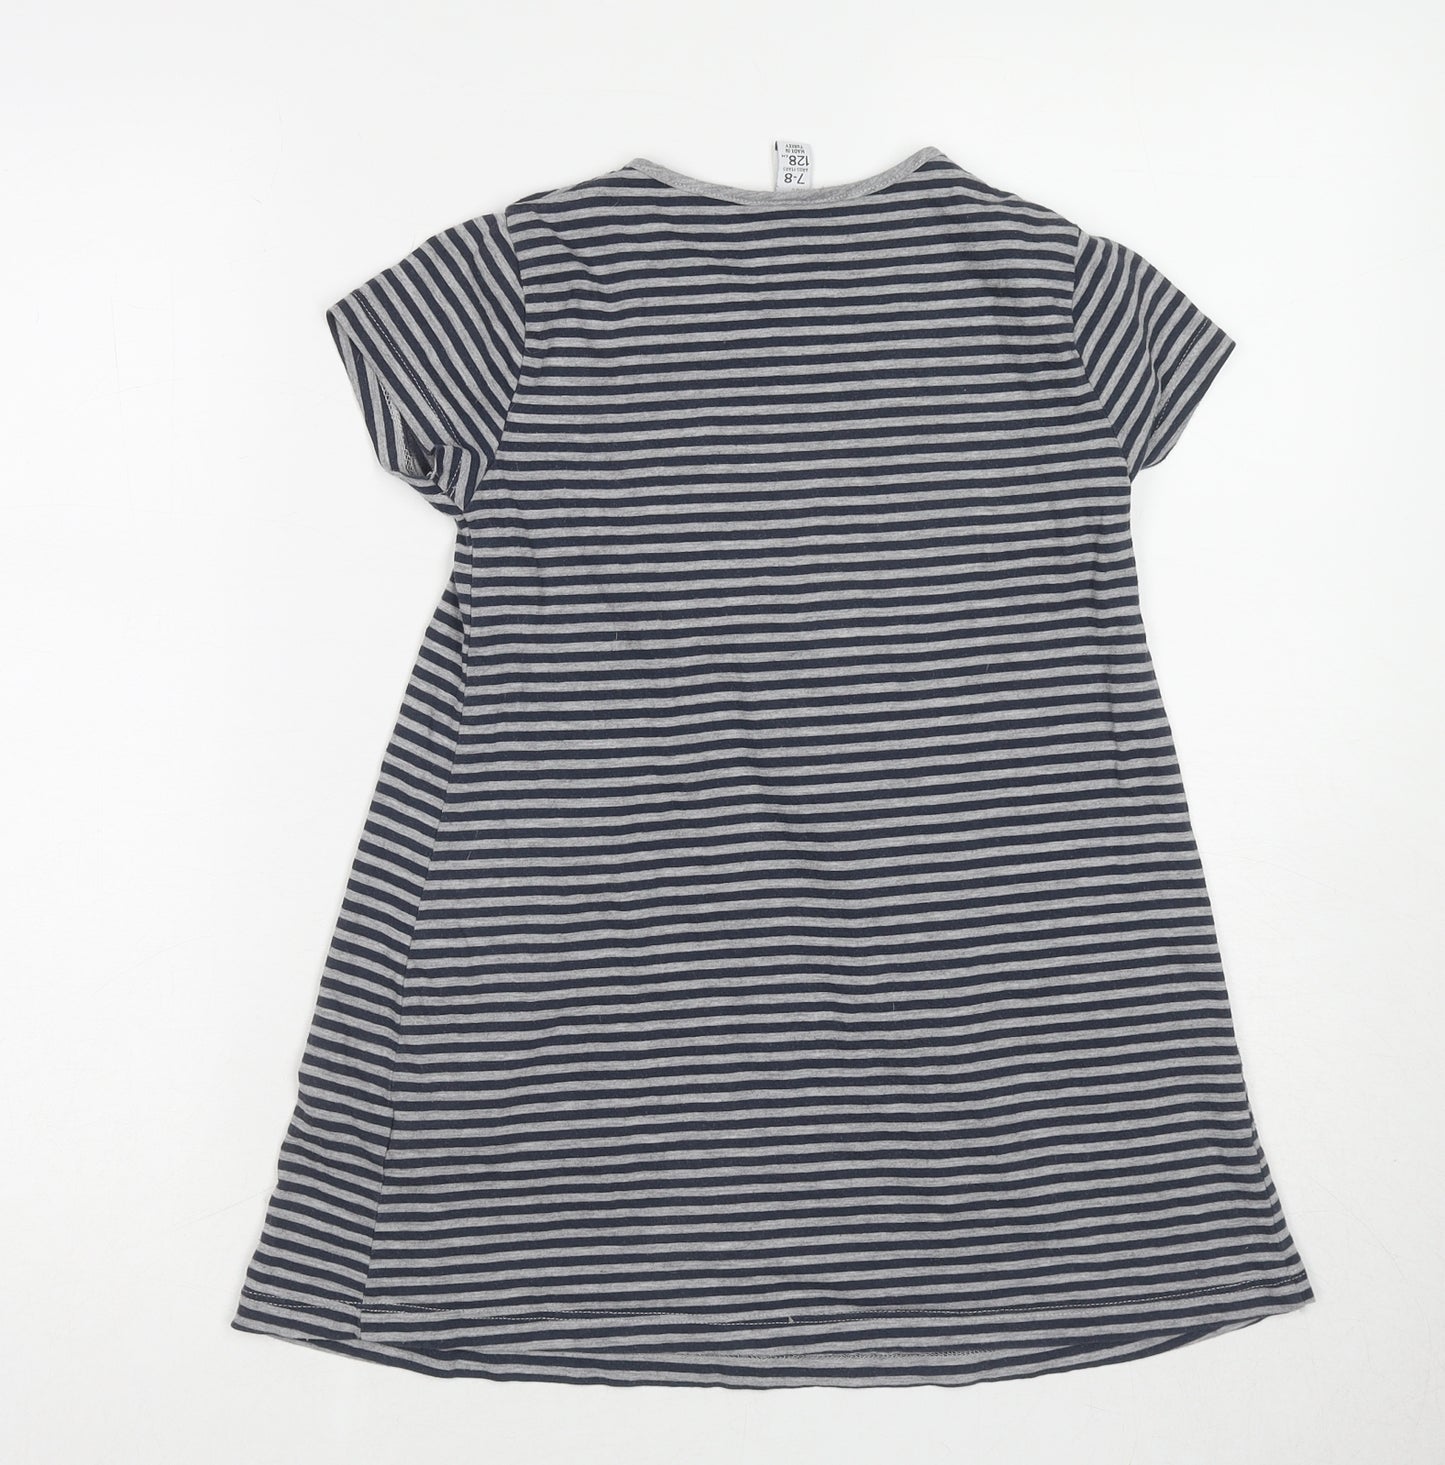 Zara Girls Grey Striped Cotton Tunic T-Shirt Size 7-8 Years Round Neck Pullover